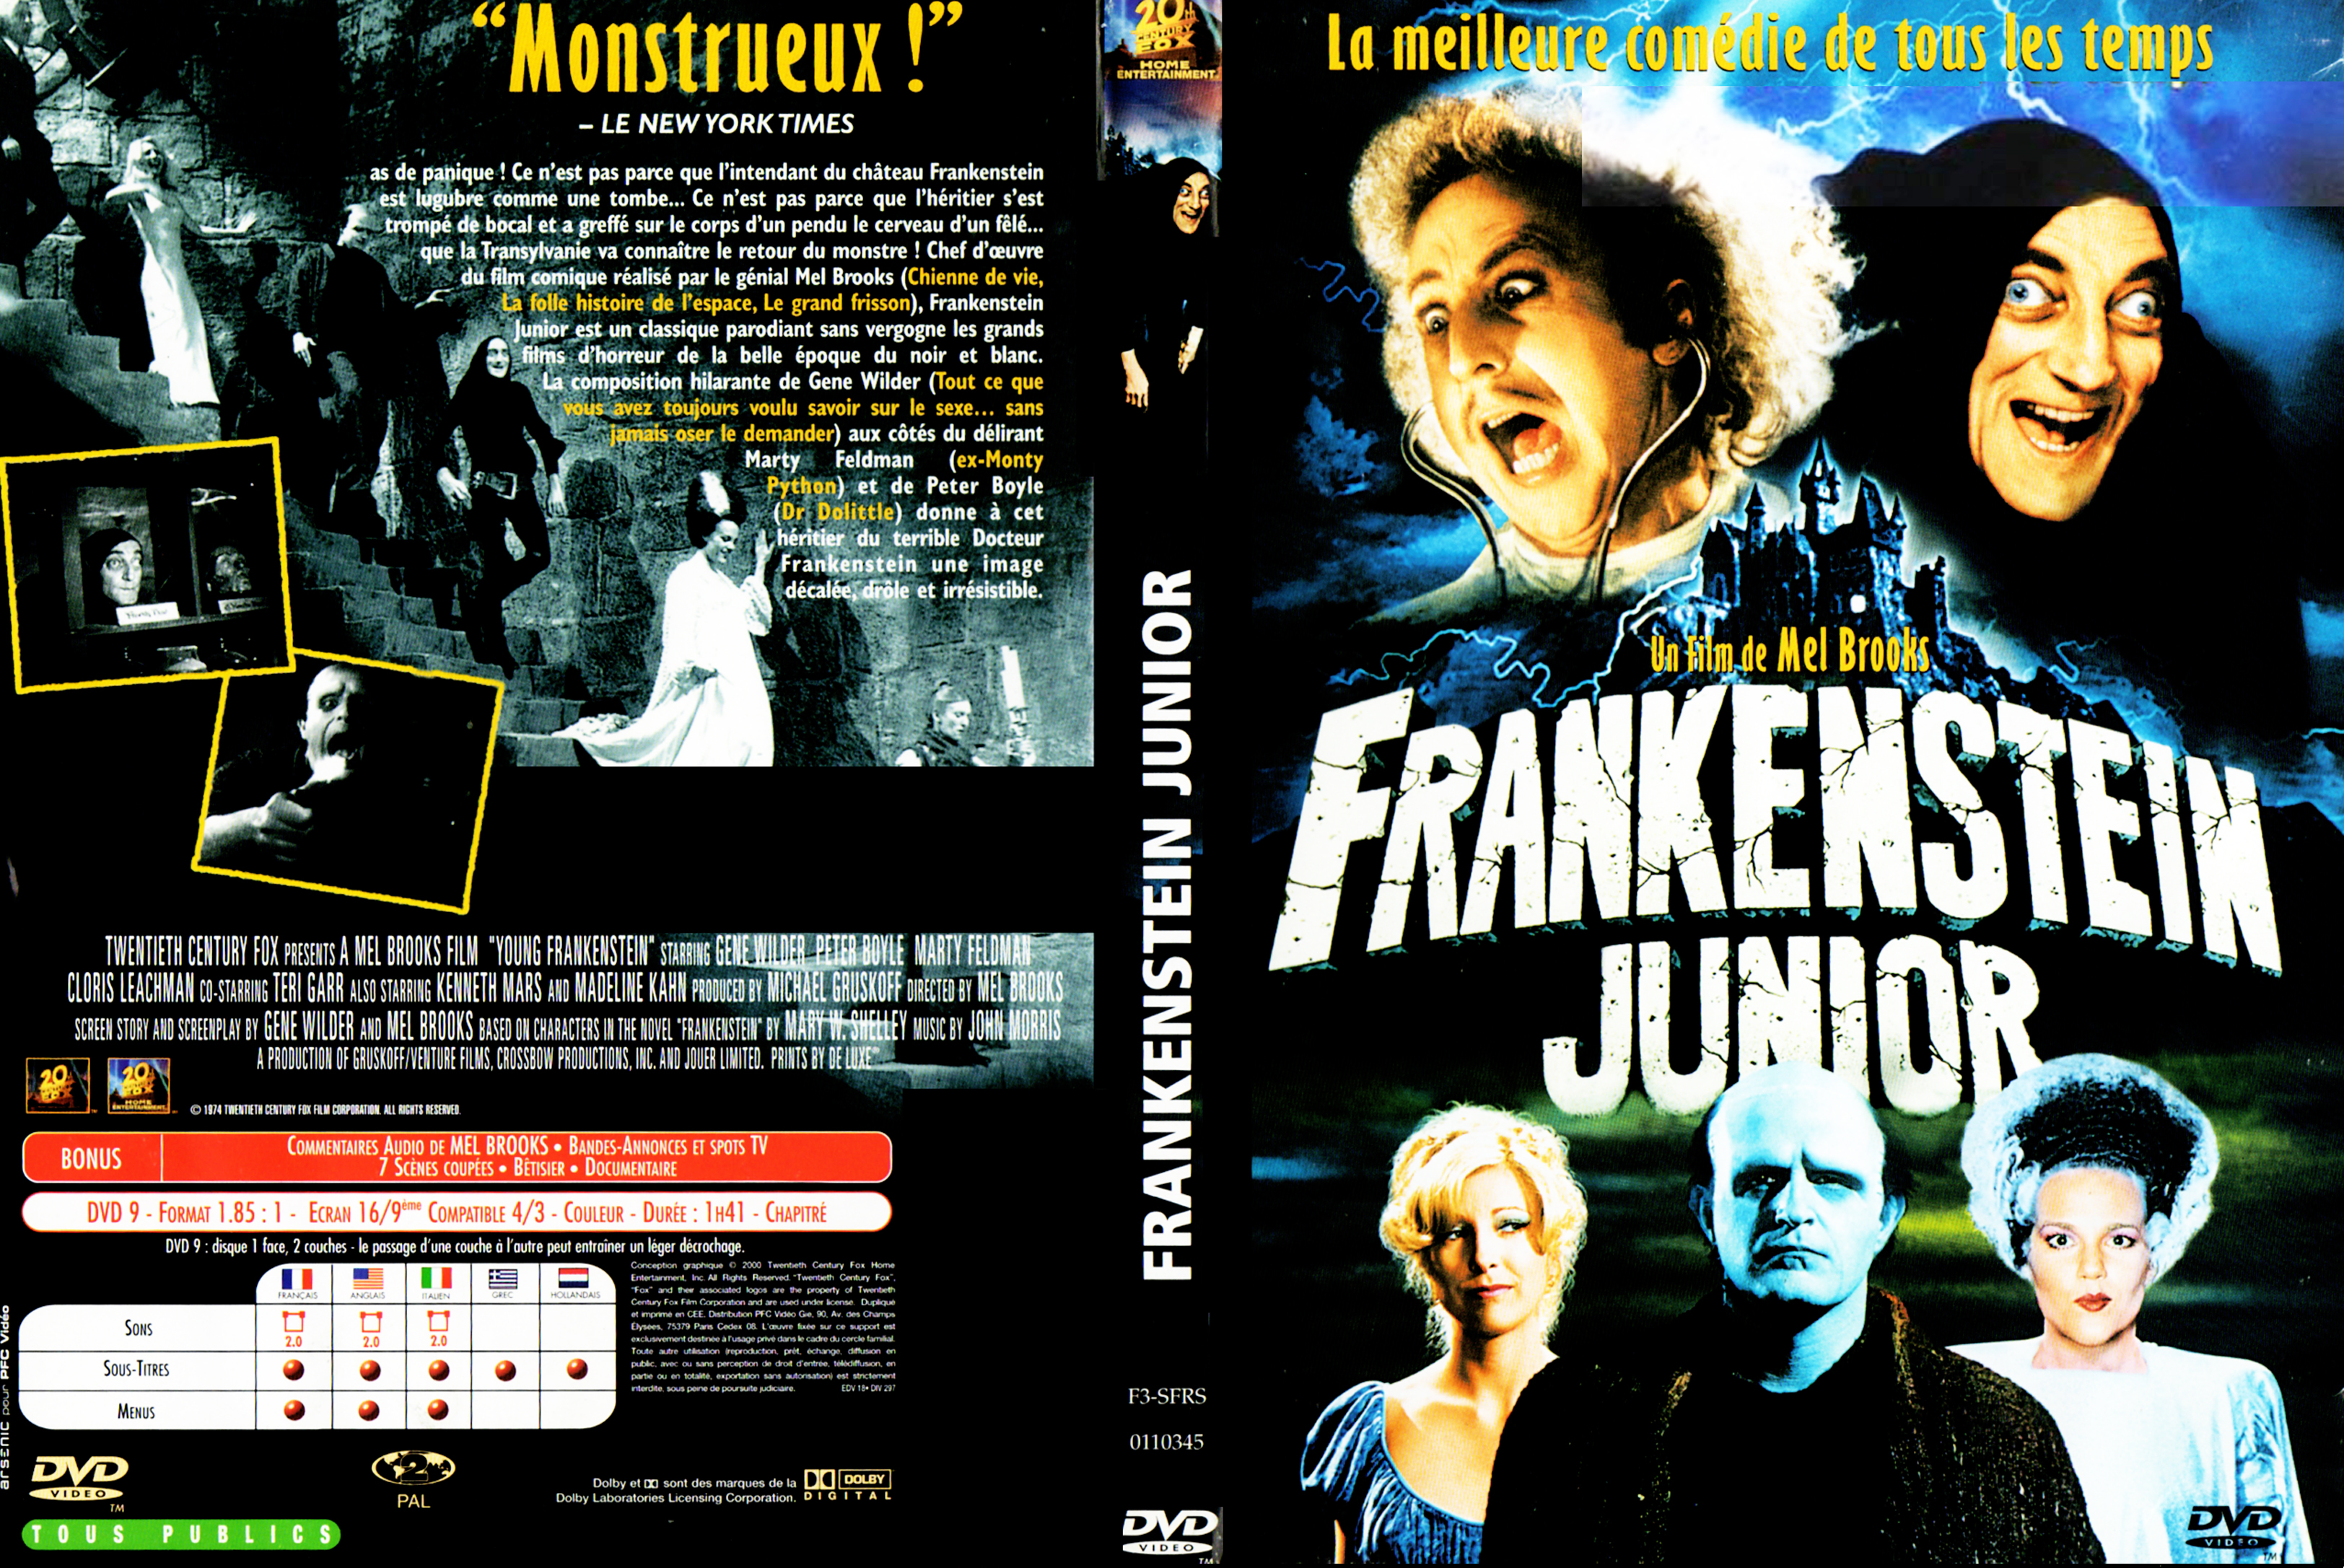 Jaquette DVD Frankenstein junior